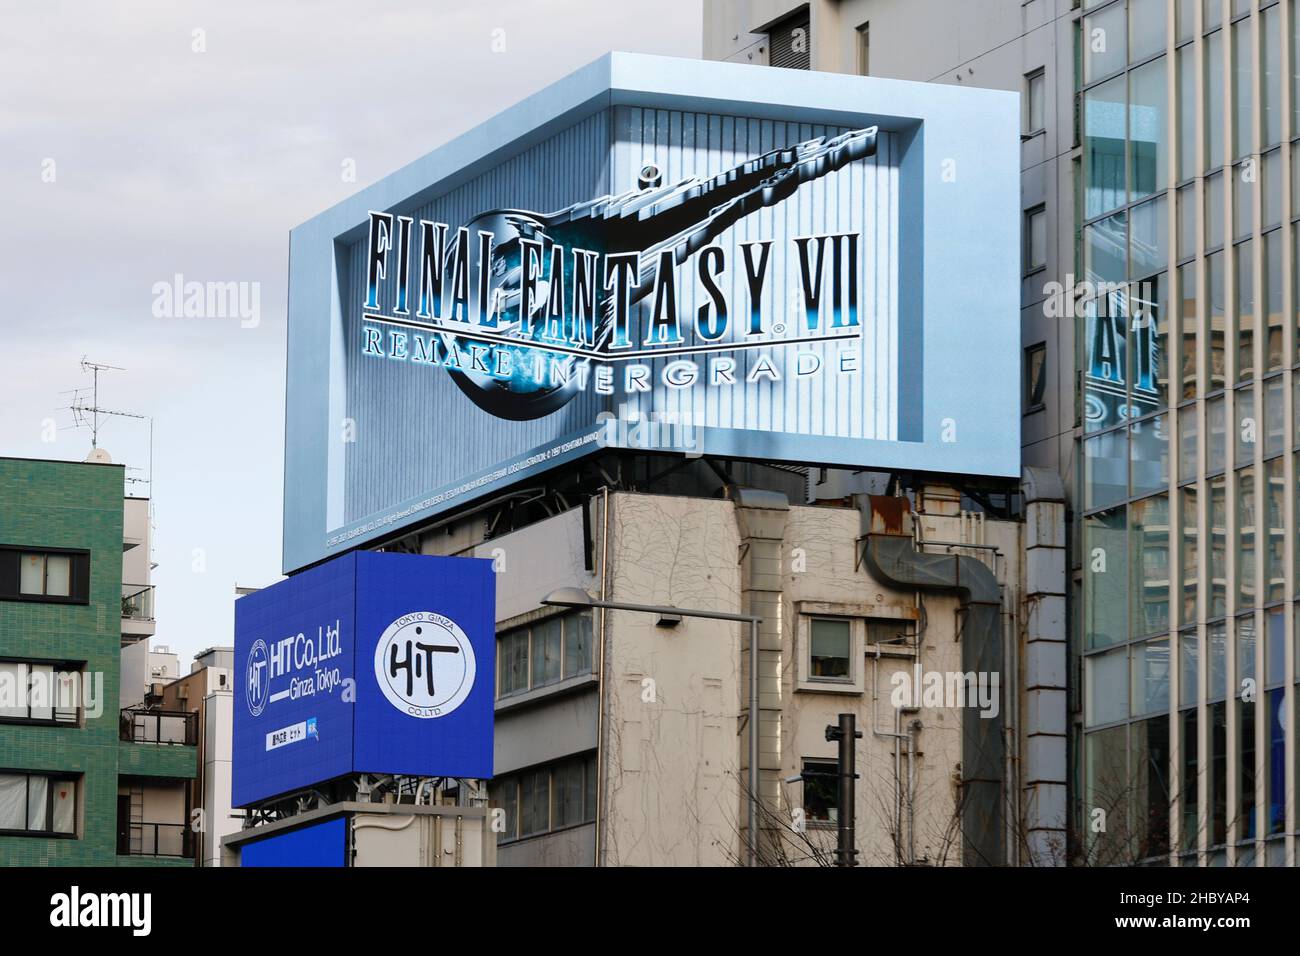 Final Fantasy scene plays out on 3-D billboard in Tokyo